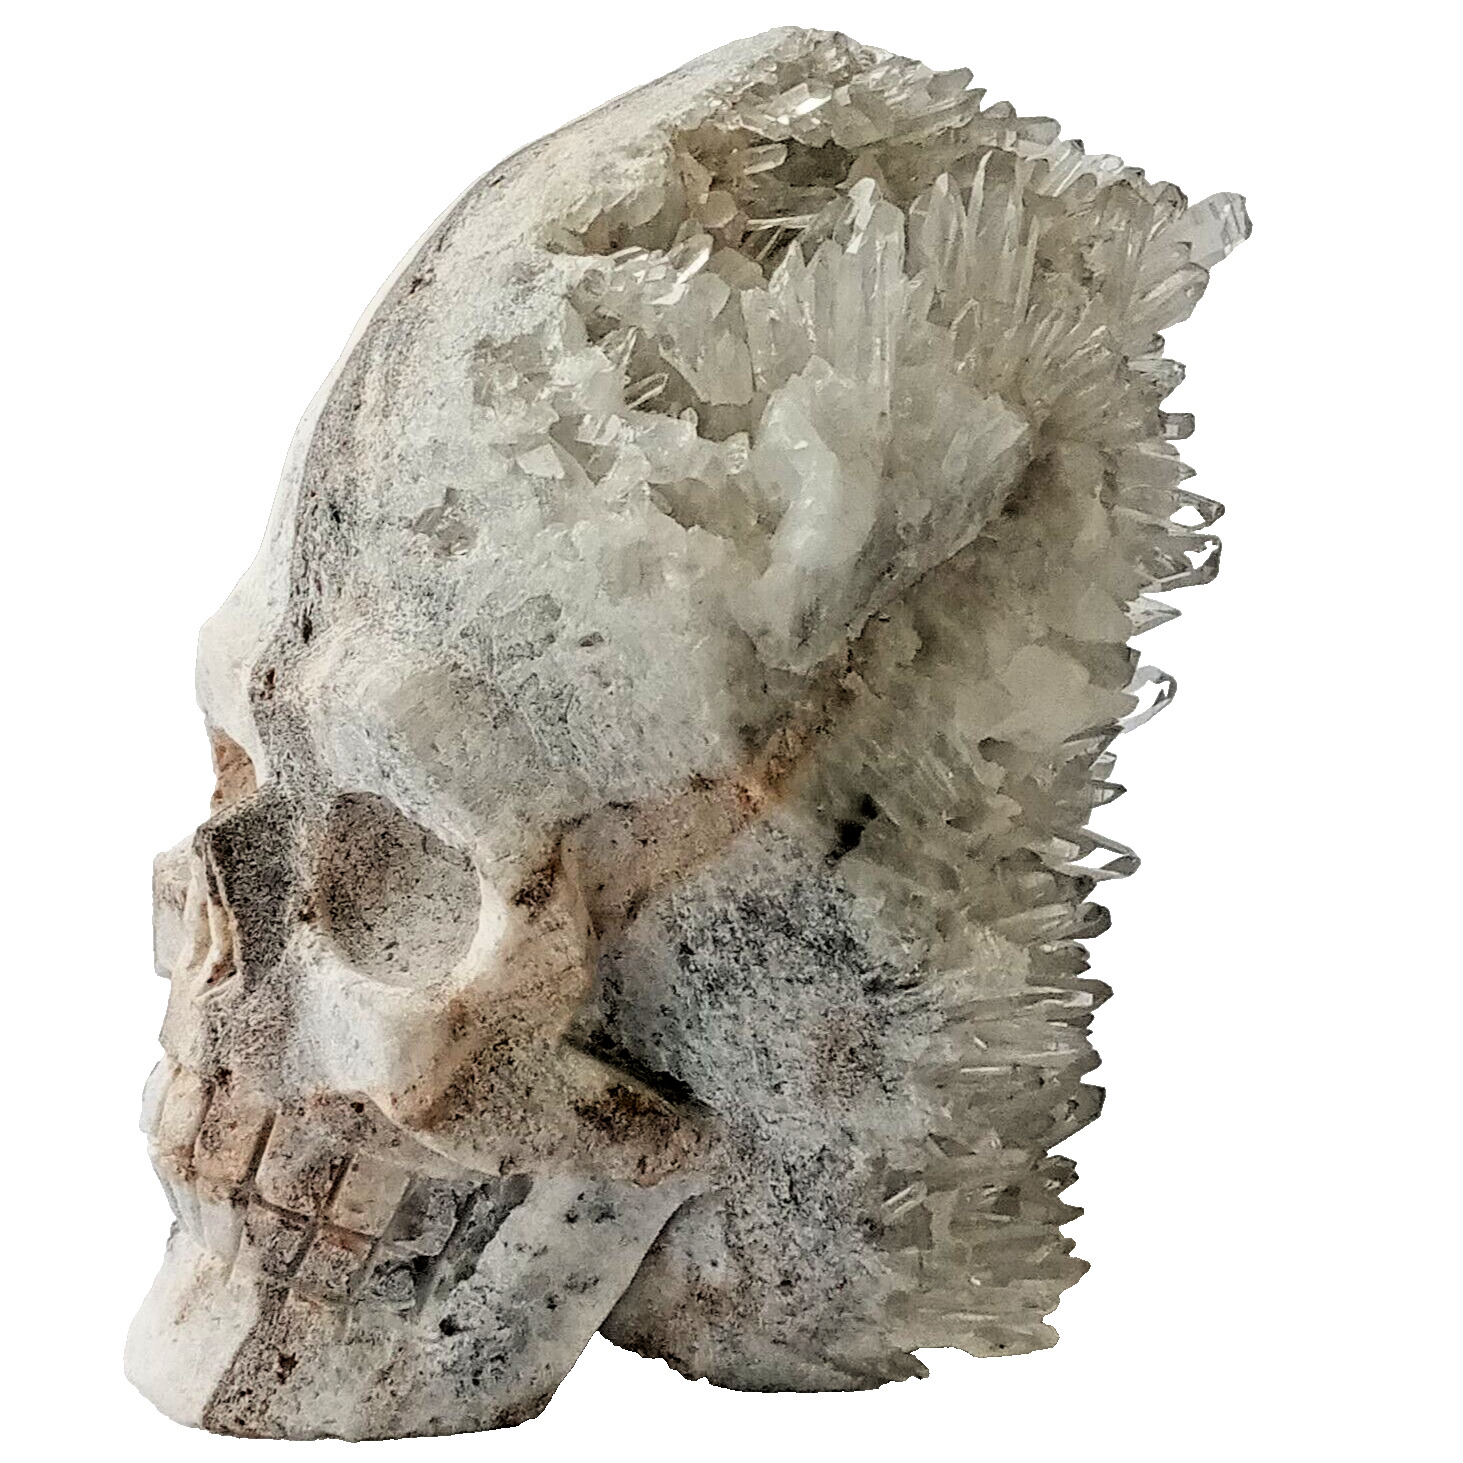 RARE 1 lb 10 oz Hand Carved Quartz Crystal Skull Geode Ultra Clear Fine Point